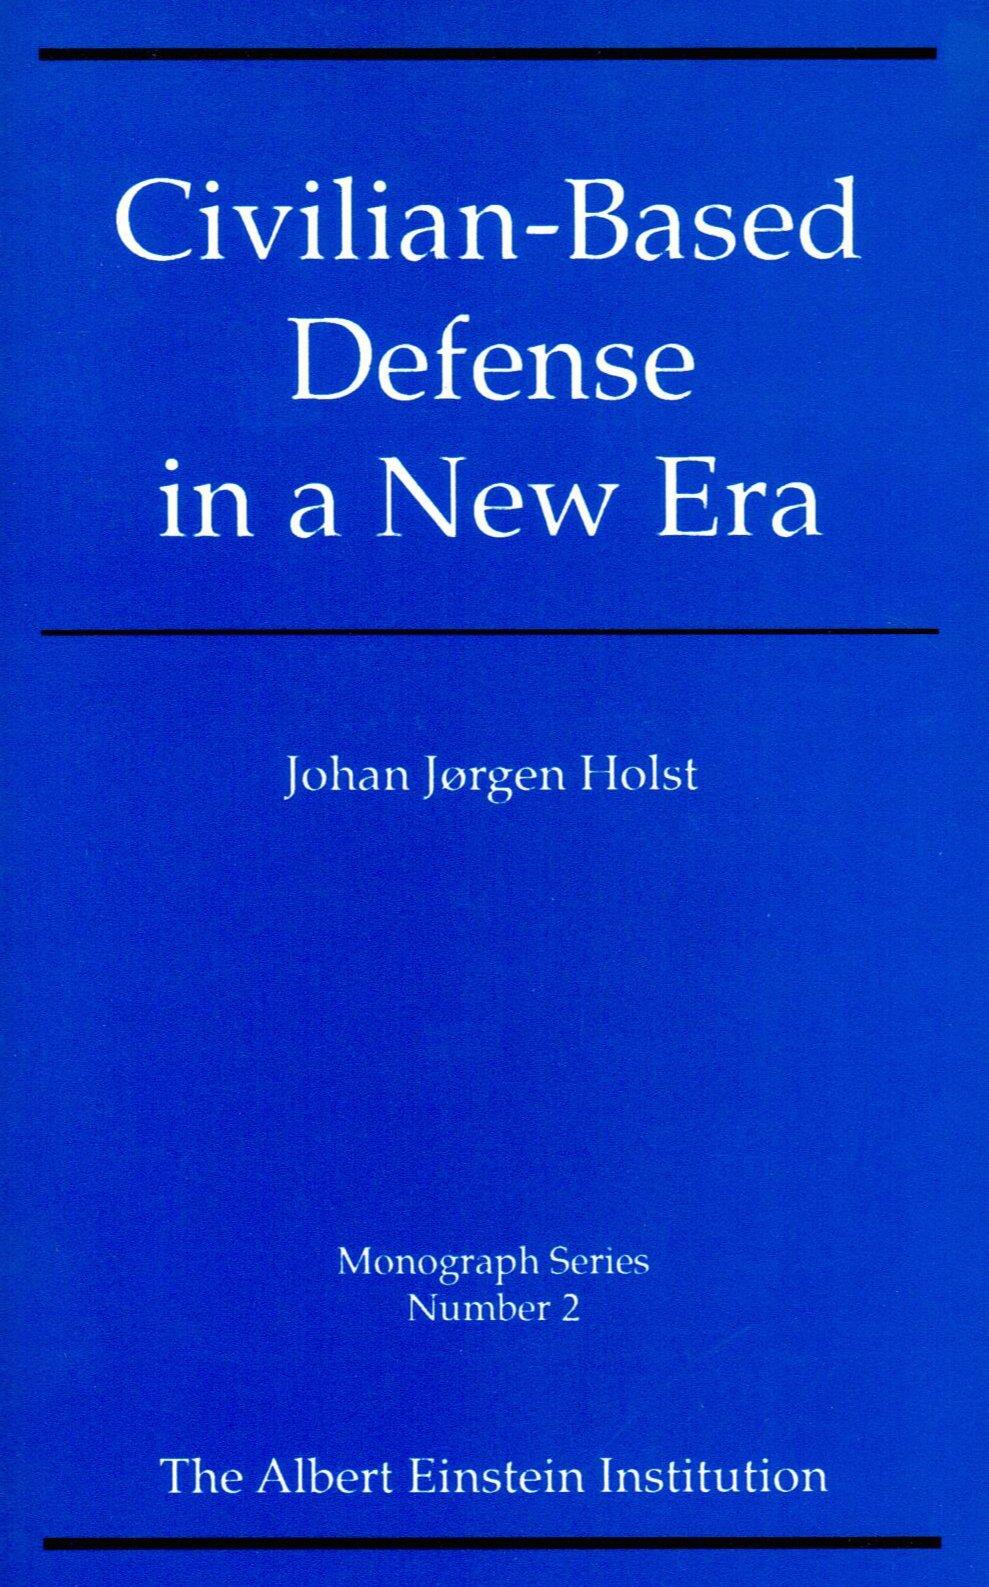 Civilian-Based Defense in a New Era (1990) by Johan Jorgen Holst